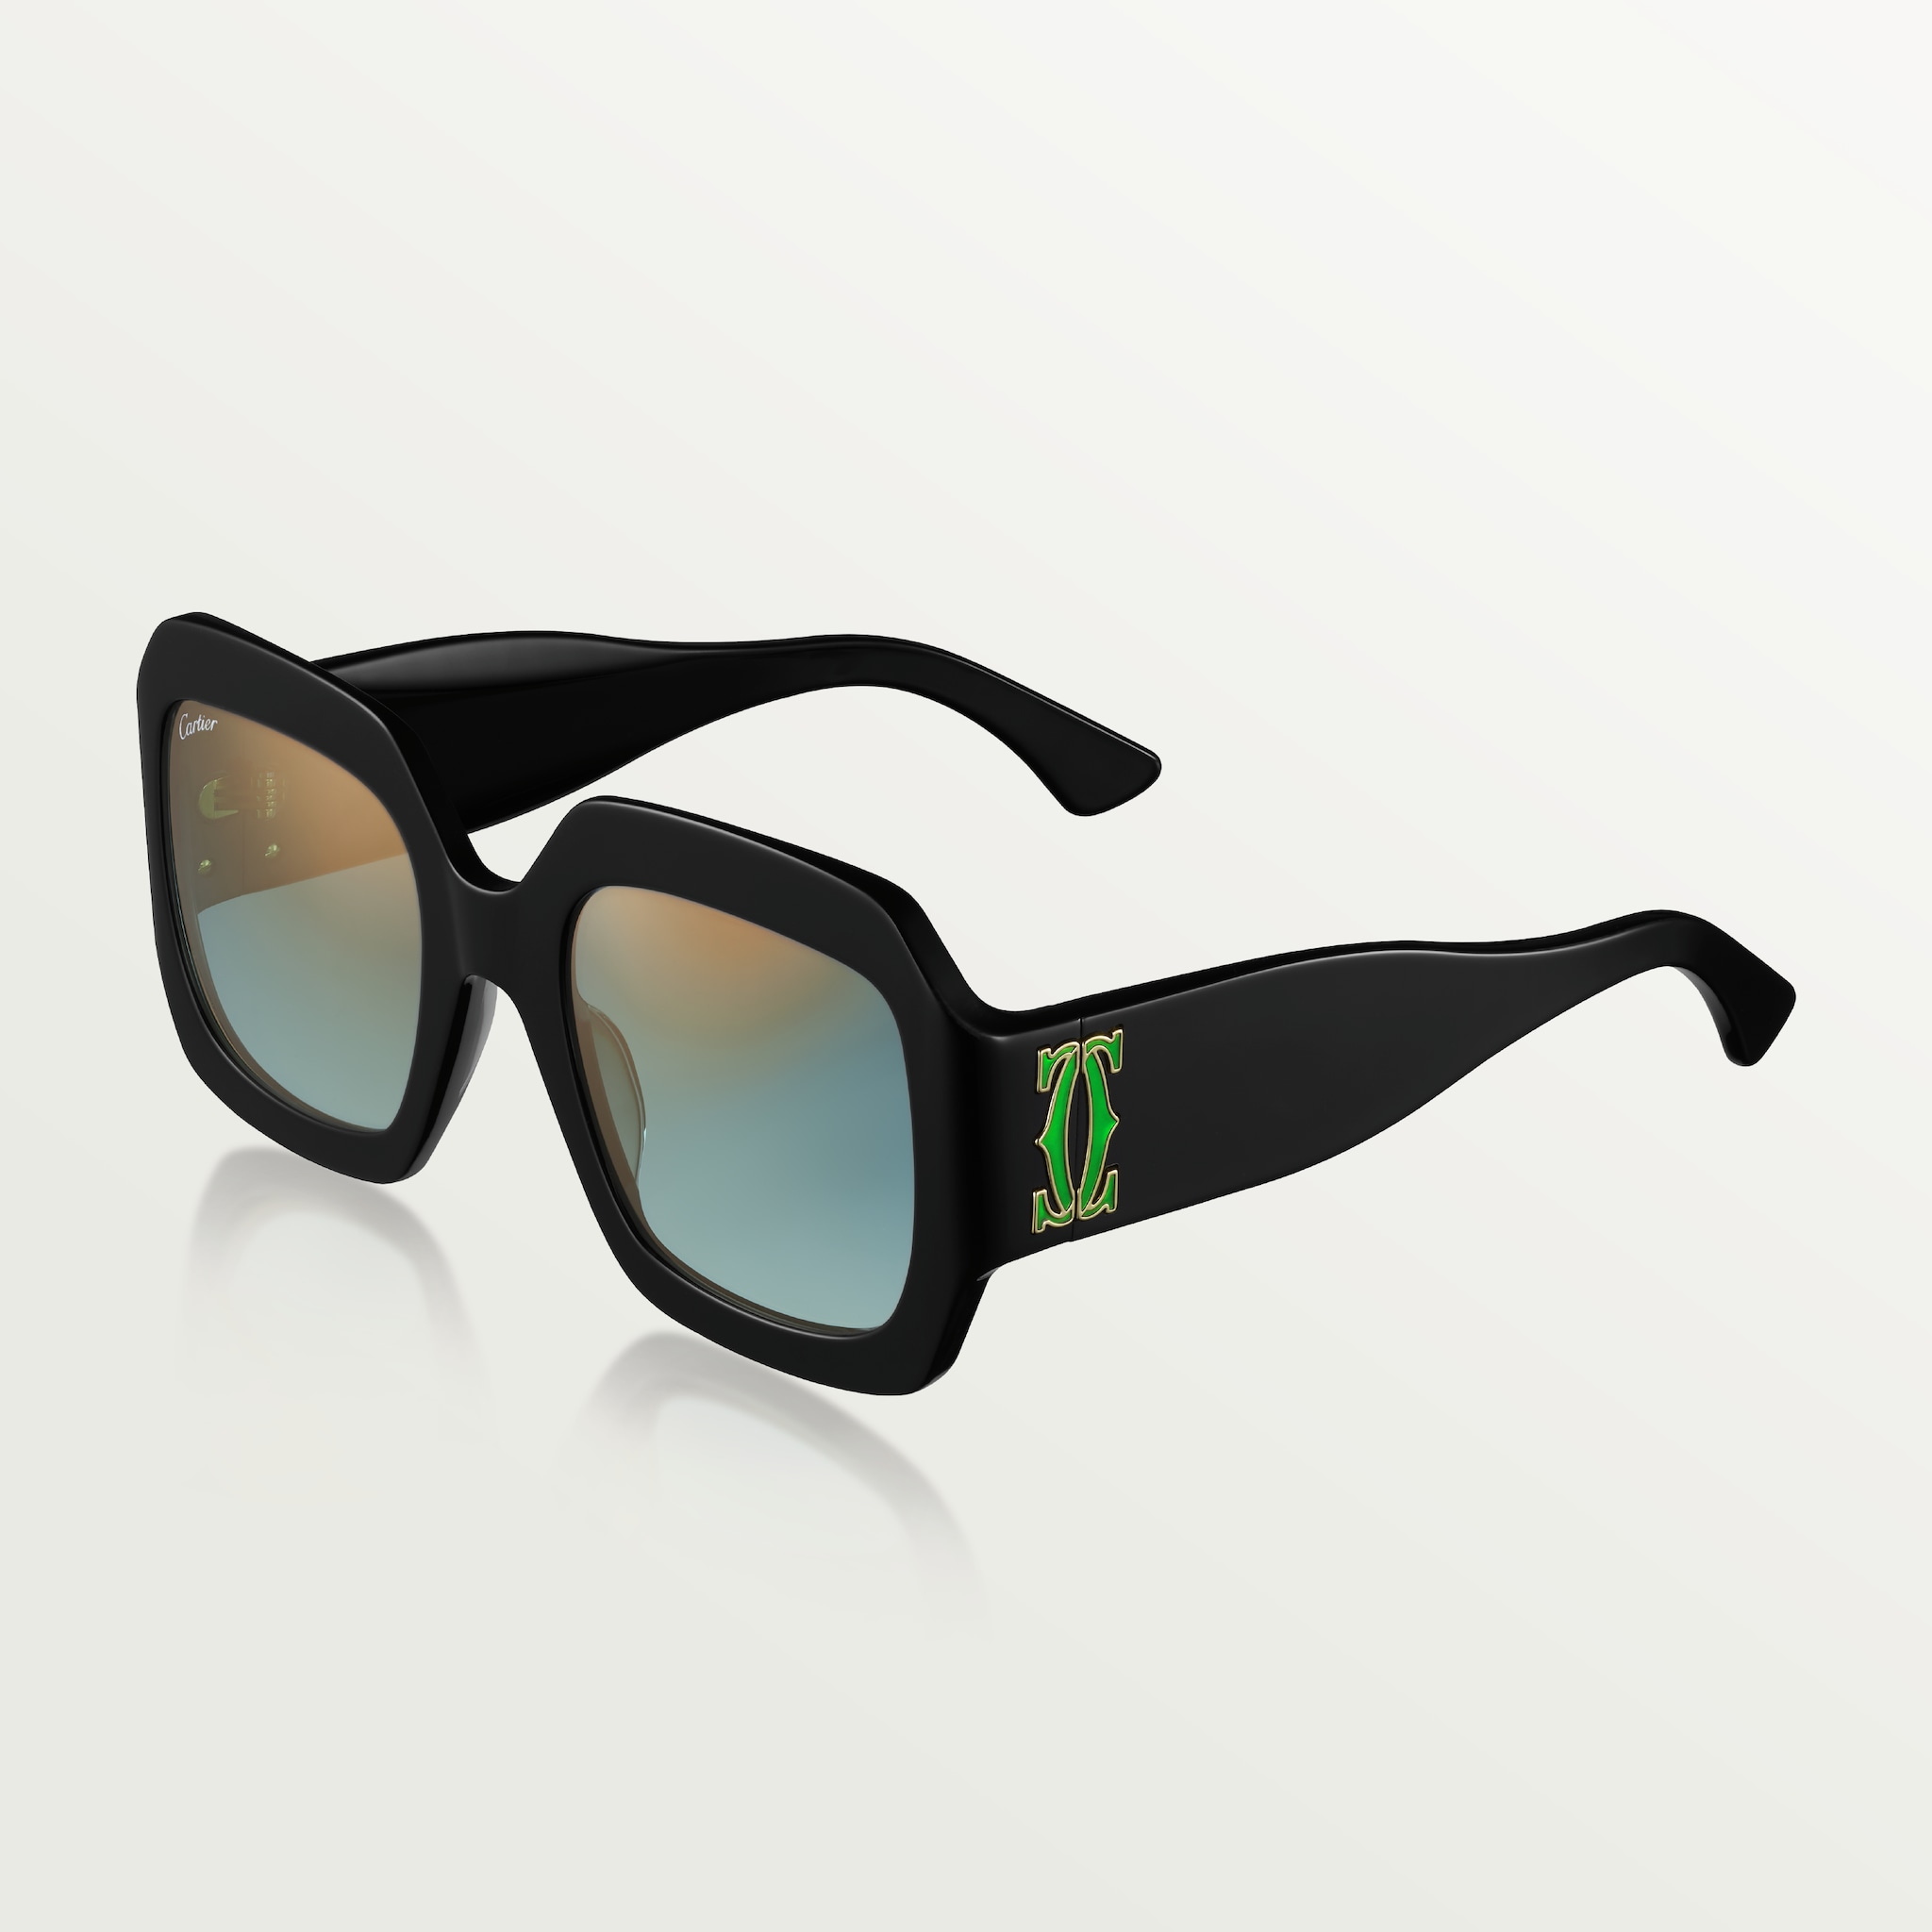 Gafas de sol Double C de CartierAcetato negro, lentes degradadas verdes